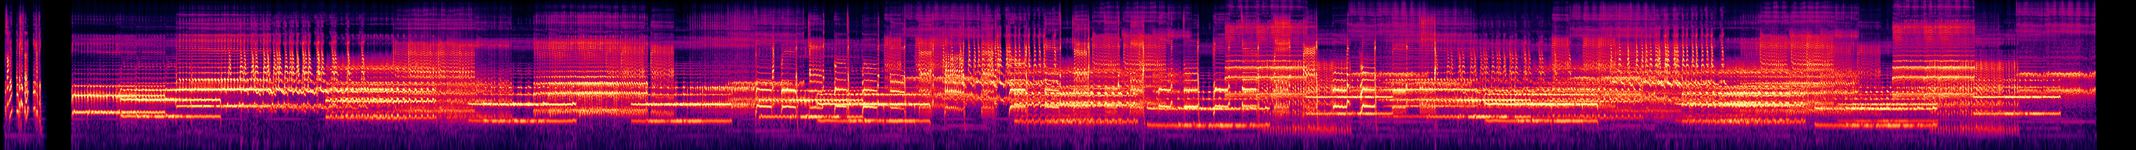 13 Radiophone Texte - 01. Auf Dem Land - Spectrogram.jpg